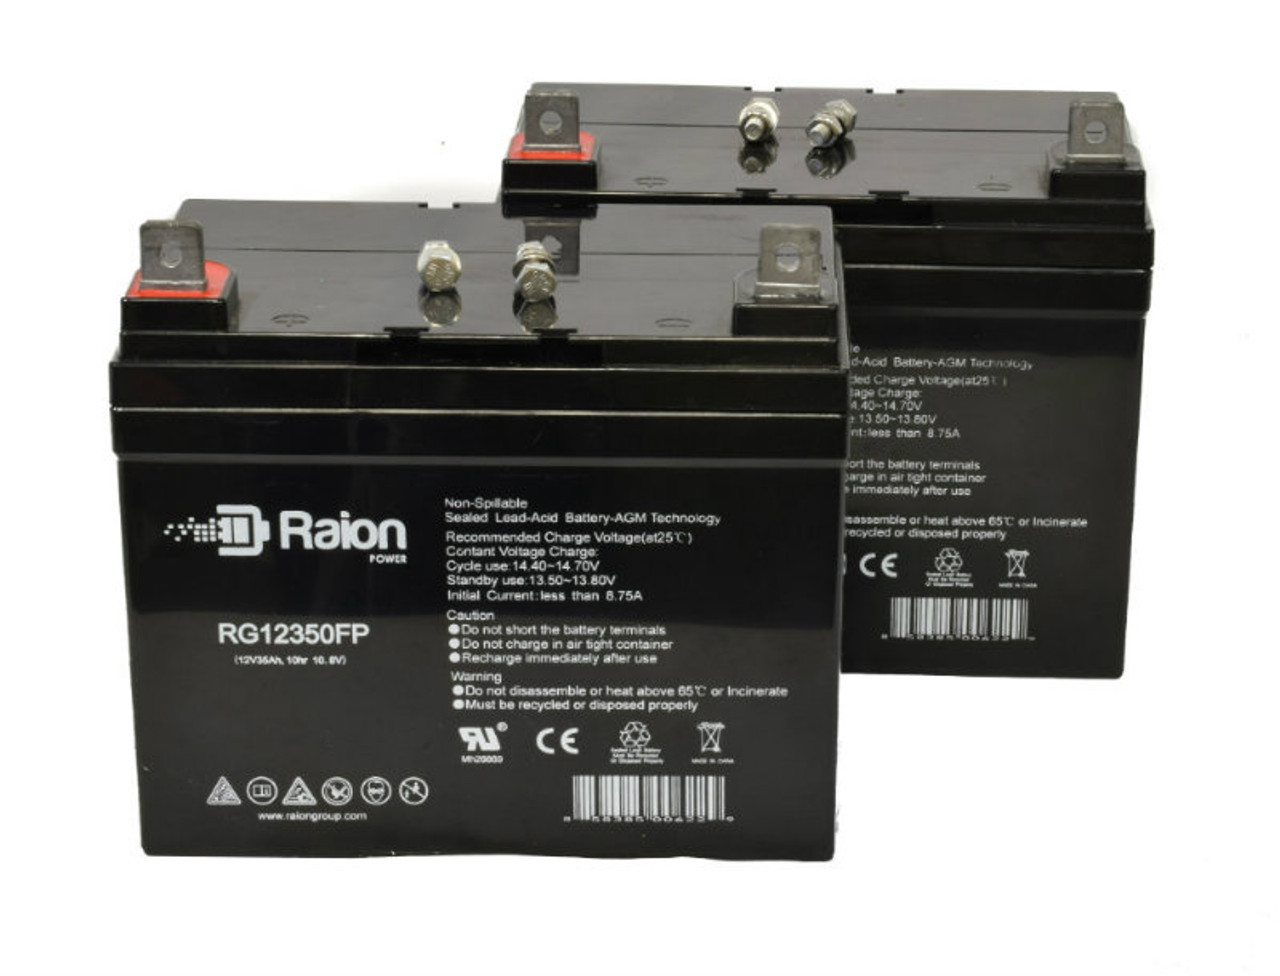 Raion Power Replacement 12V 35Ah Lawn Mower Battery for Kubota B6100 - 2 Pack